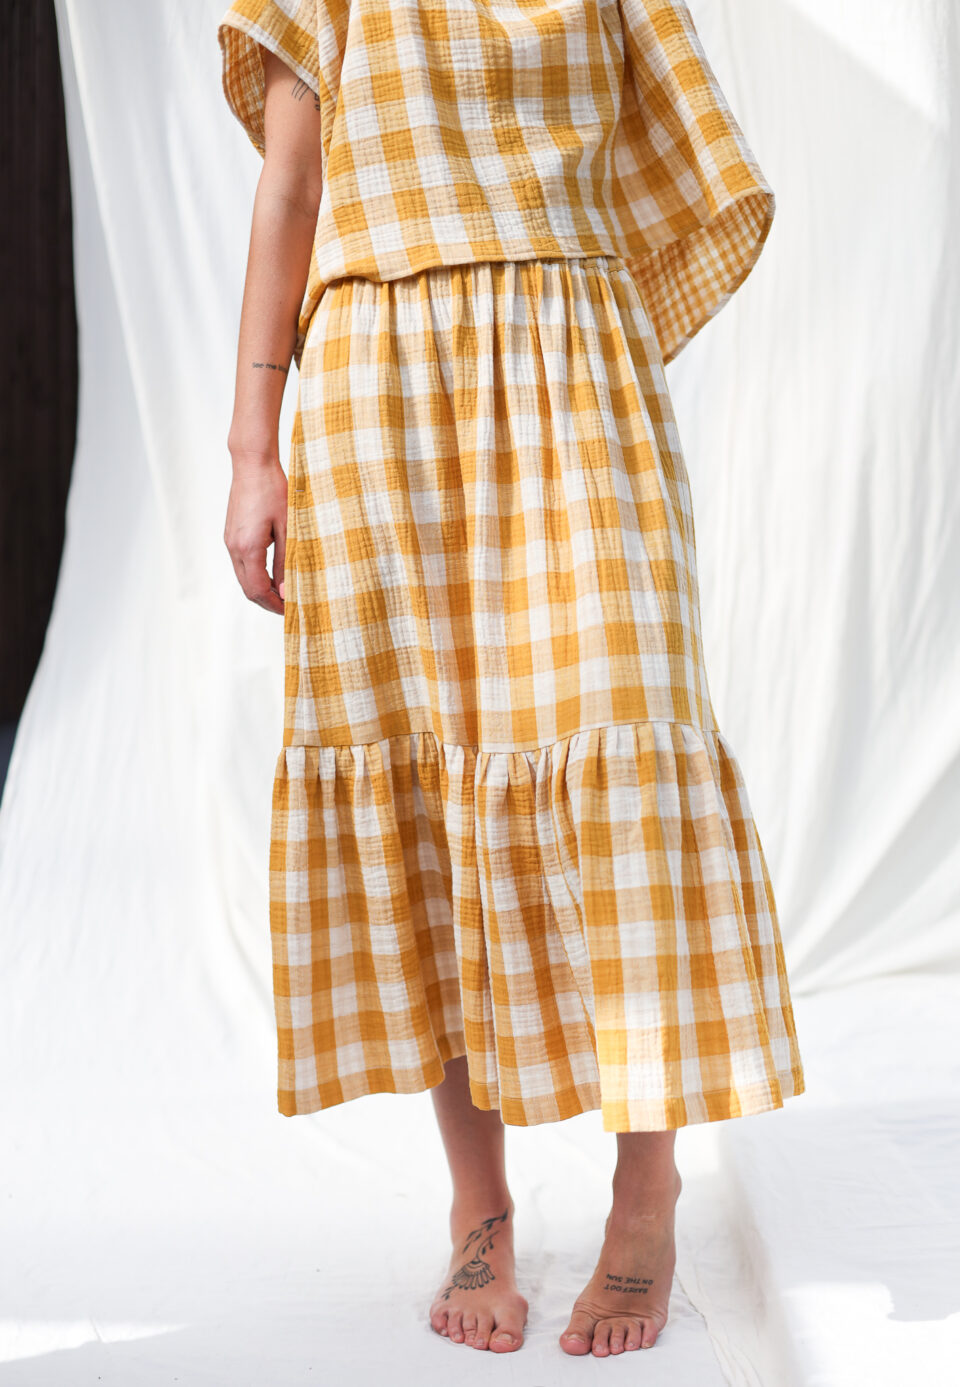 Double gauze mustard checks skirt with elastic waistband | Skirt | Sustainable clothing | OffOn clothing